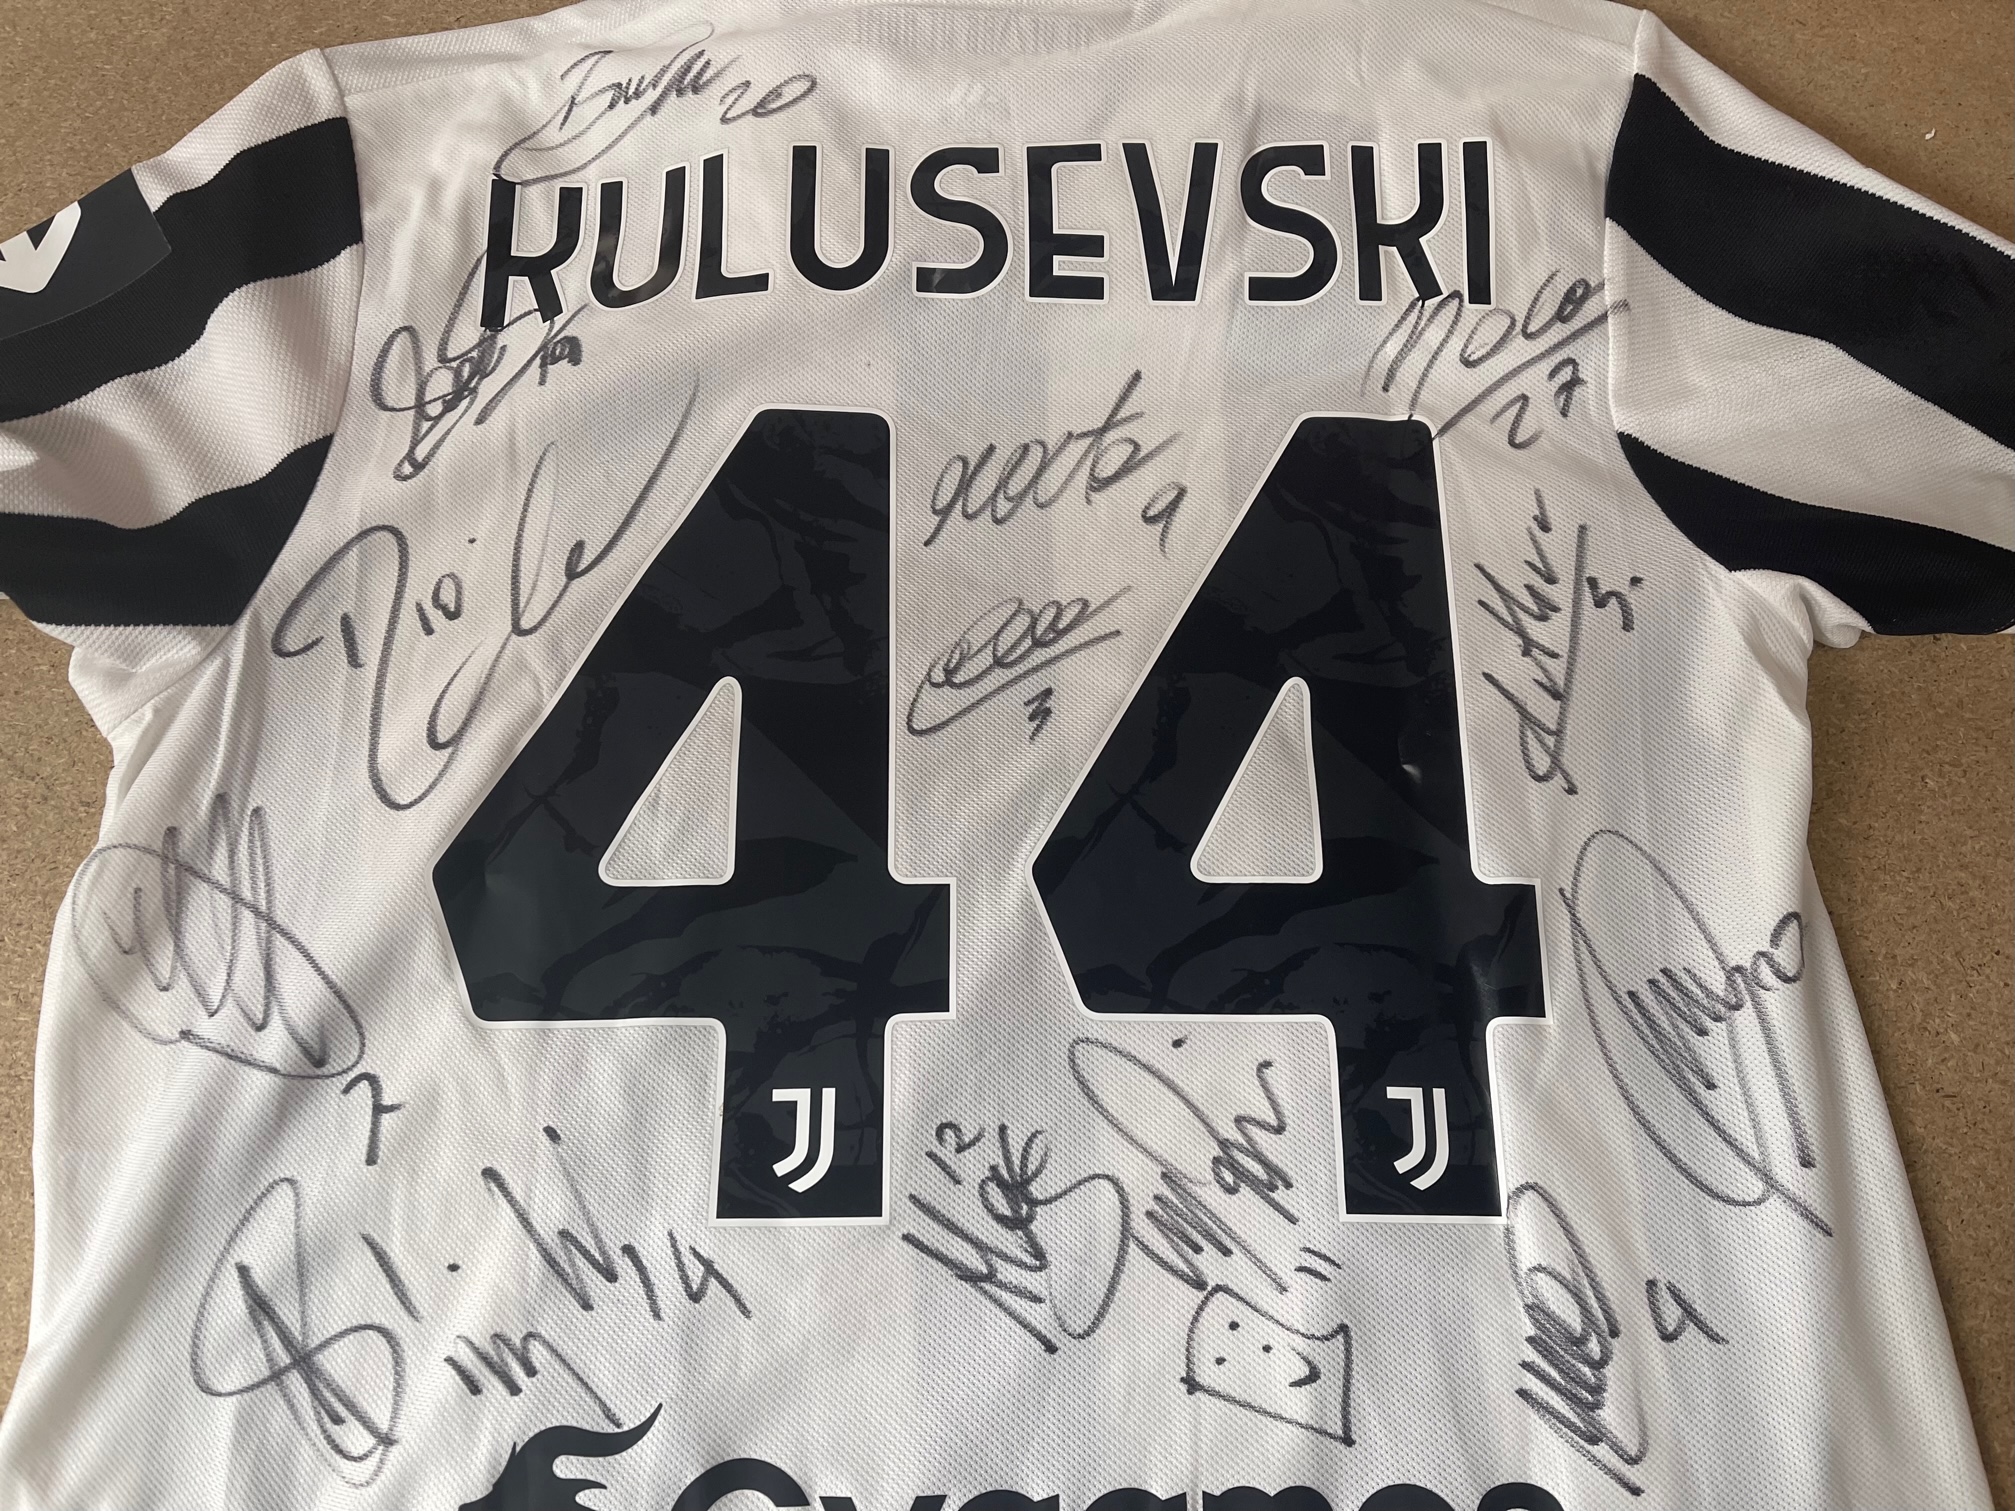 Dejan Kulusevski squad signed white and black Juventus FC no.44 home jersey, season 2021-22, match- - Image 3 of 3